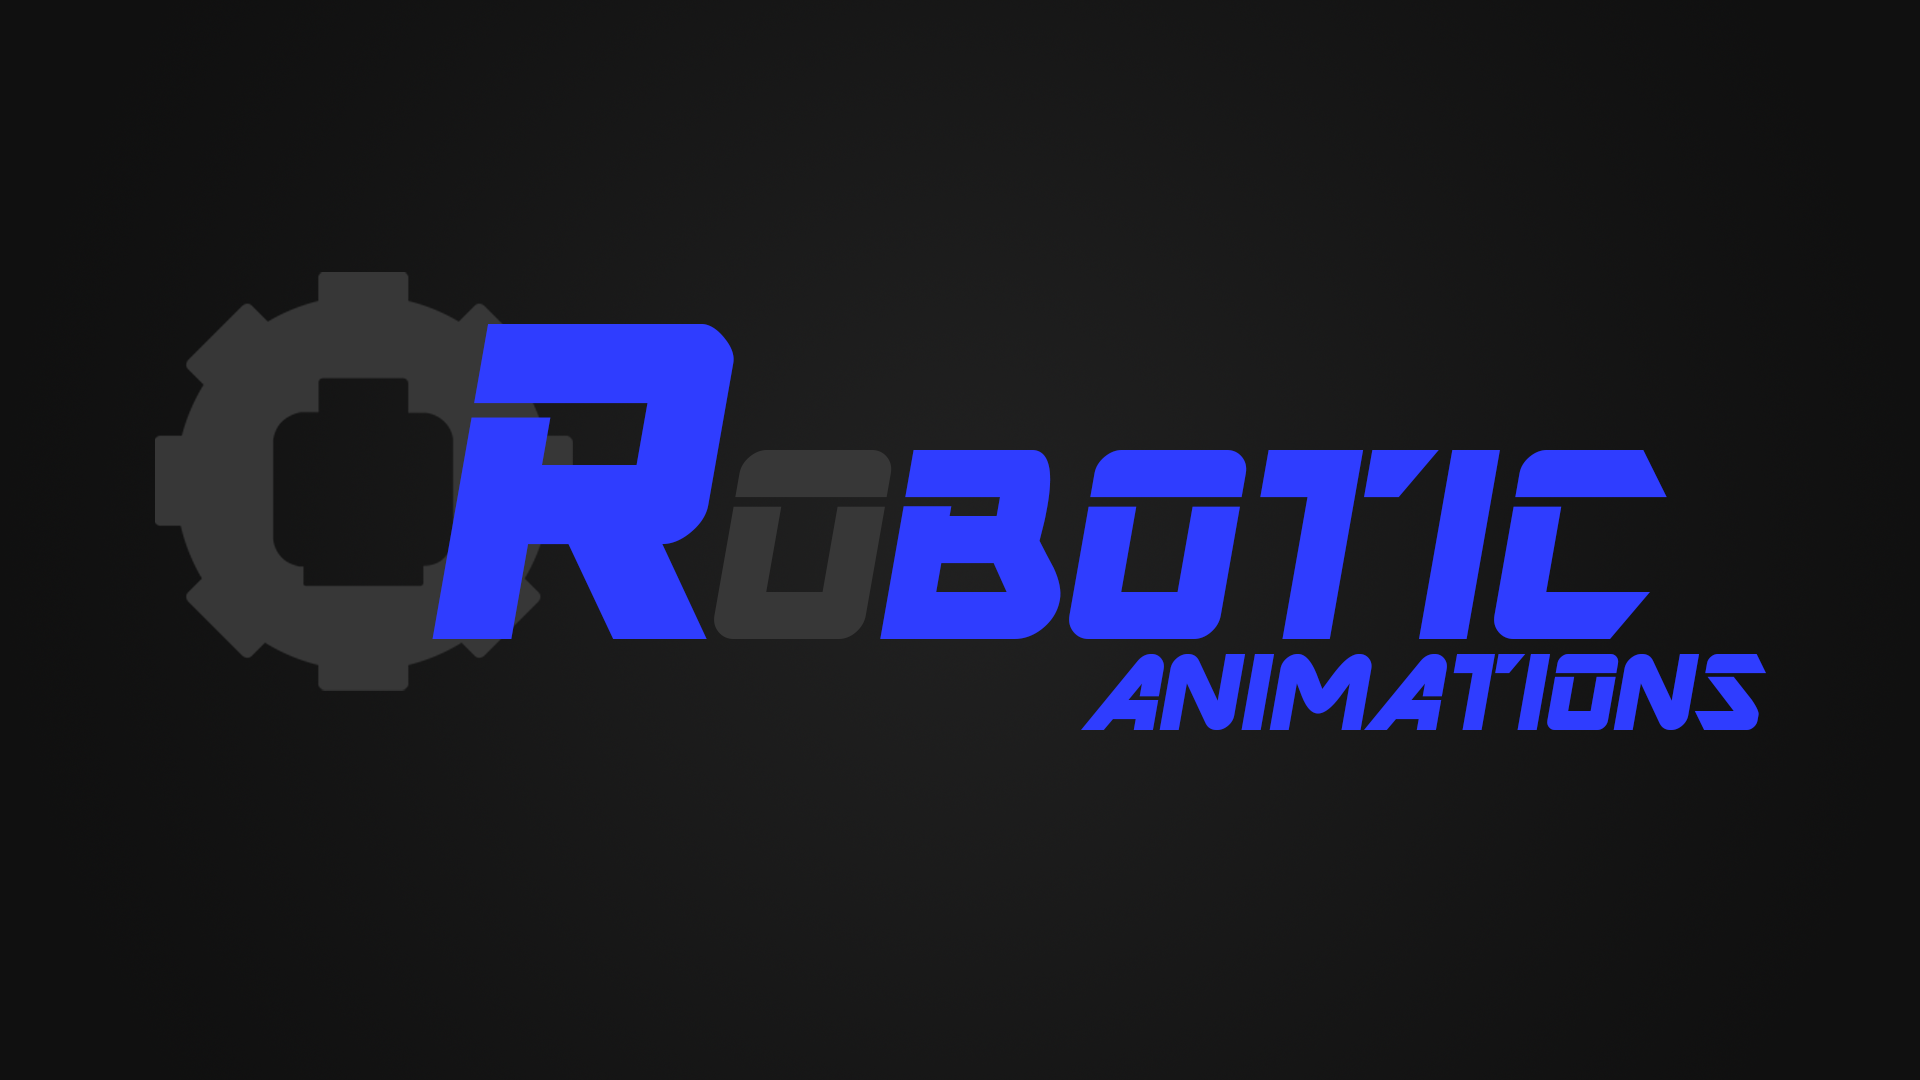 http://www.brickshelf.com/gallery/legoguy501/Random/robotic_animations3.png